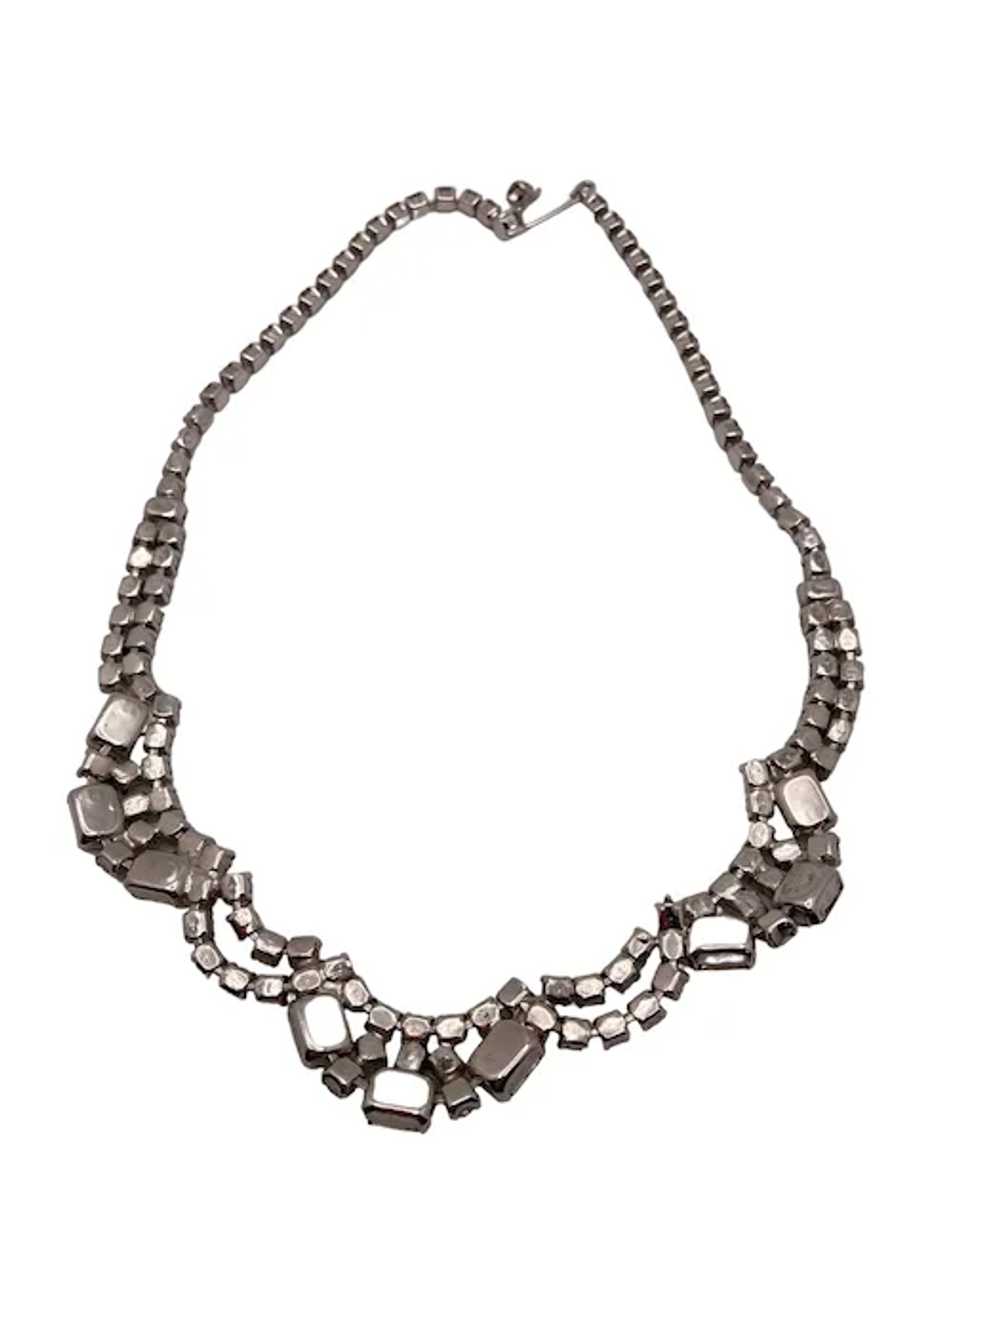 Vintage Mid-Century Rhinestone Choker Necklace - image 7